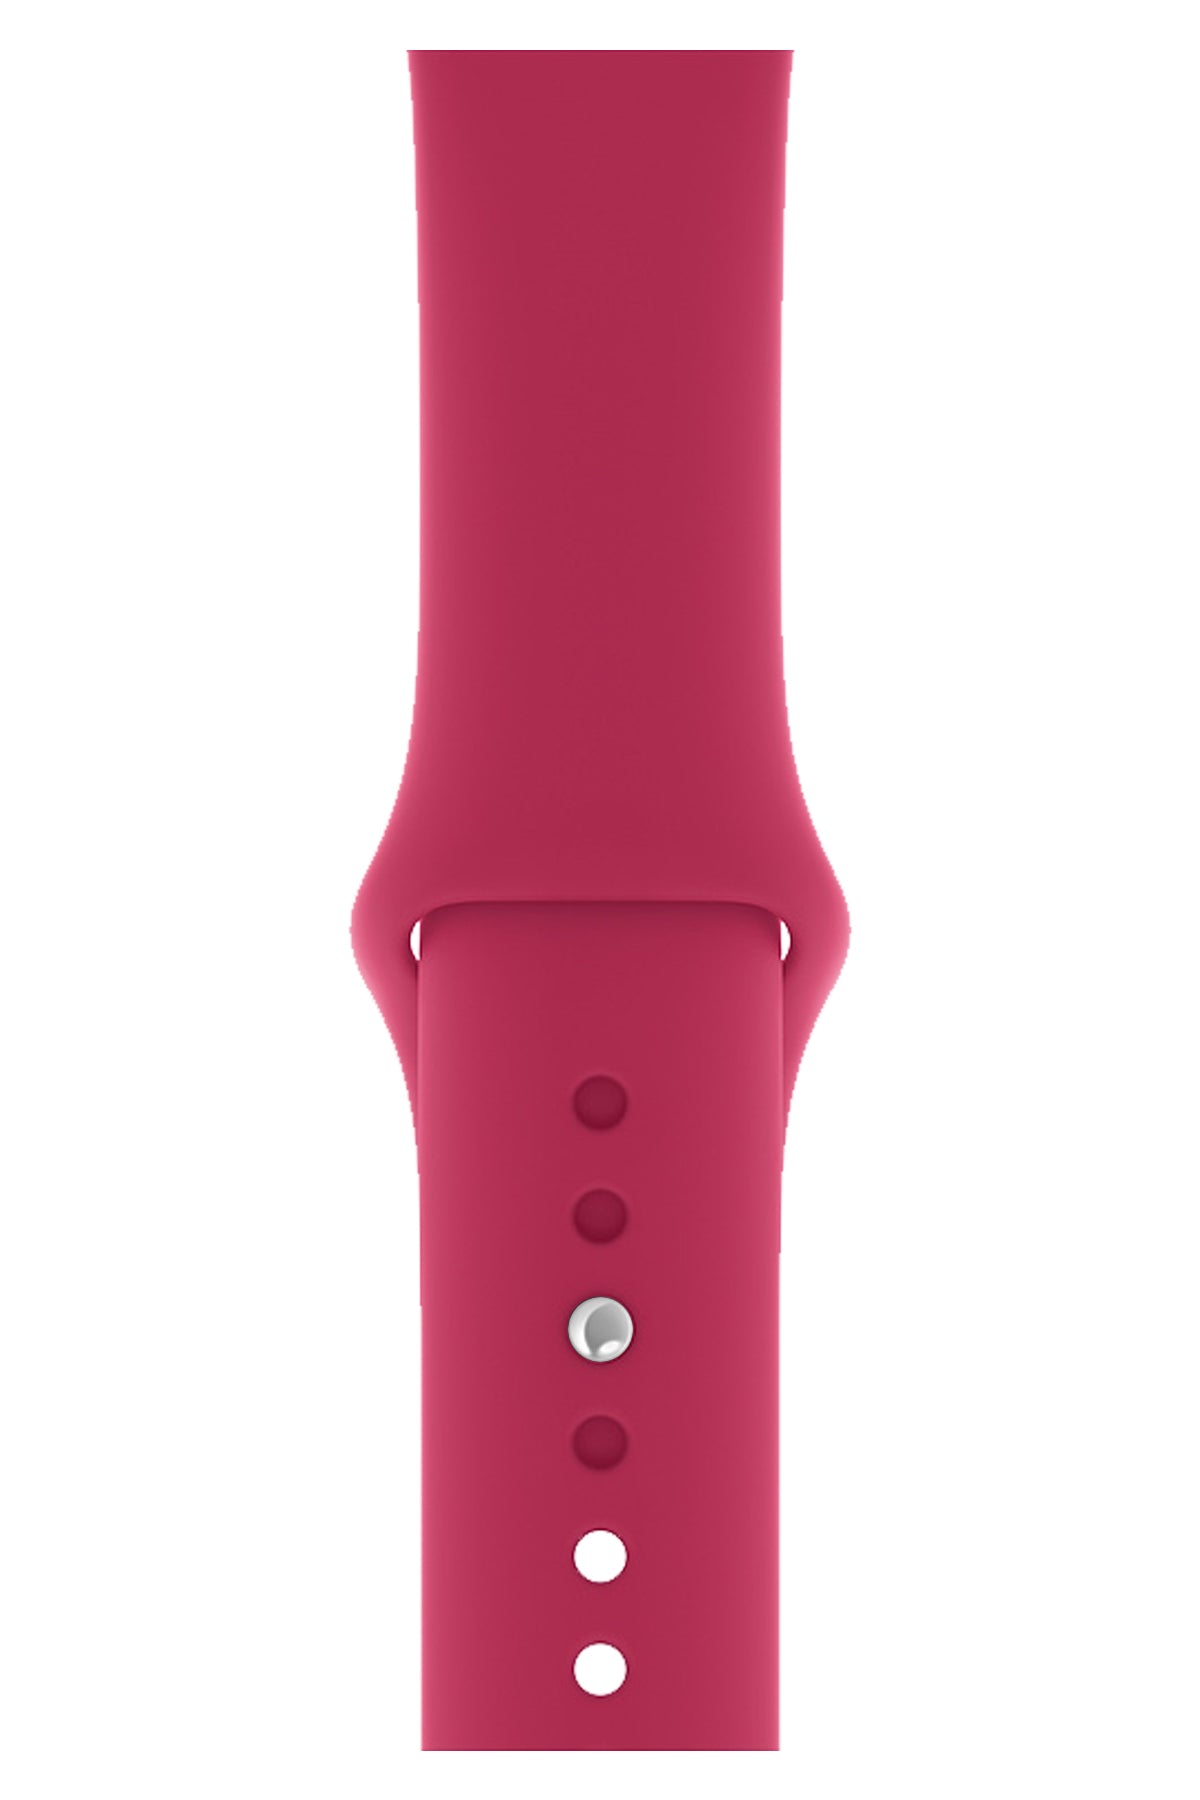 Apple Watch Compatible Silicone Sport Band Fuchsia 